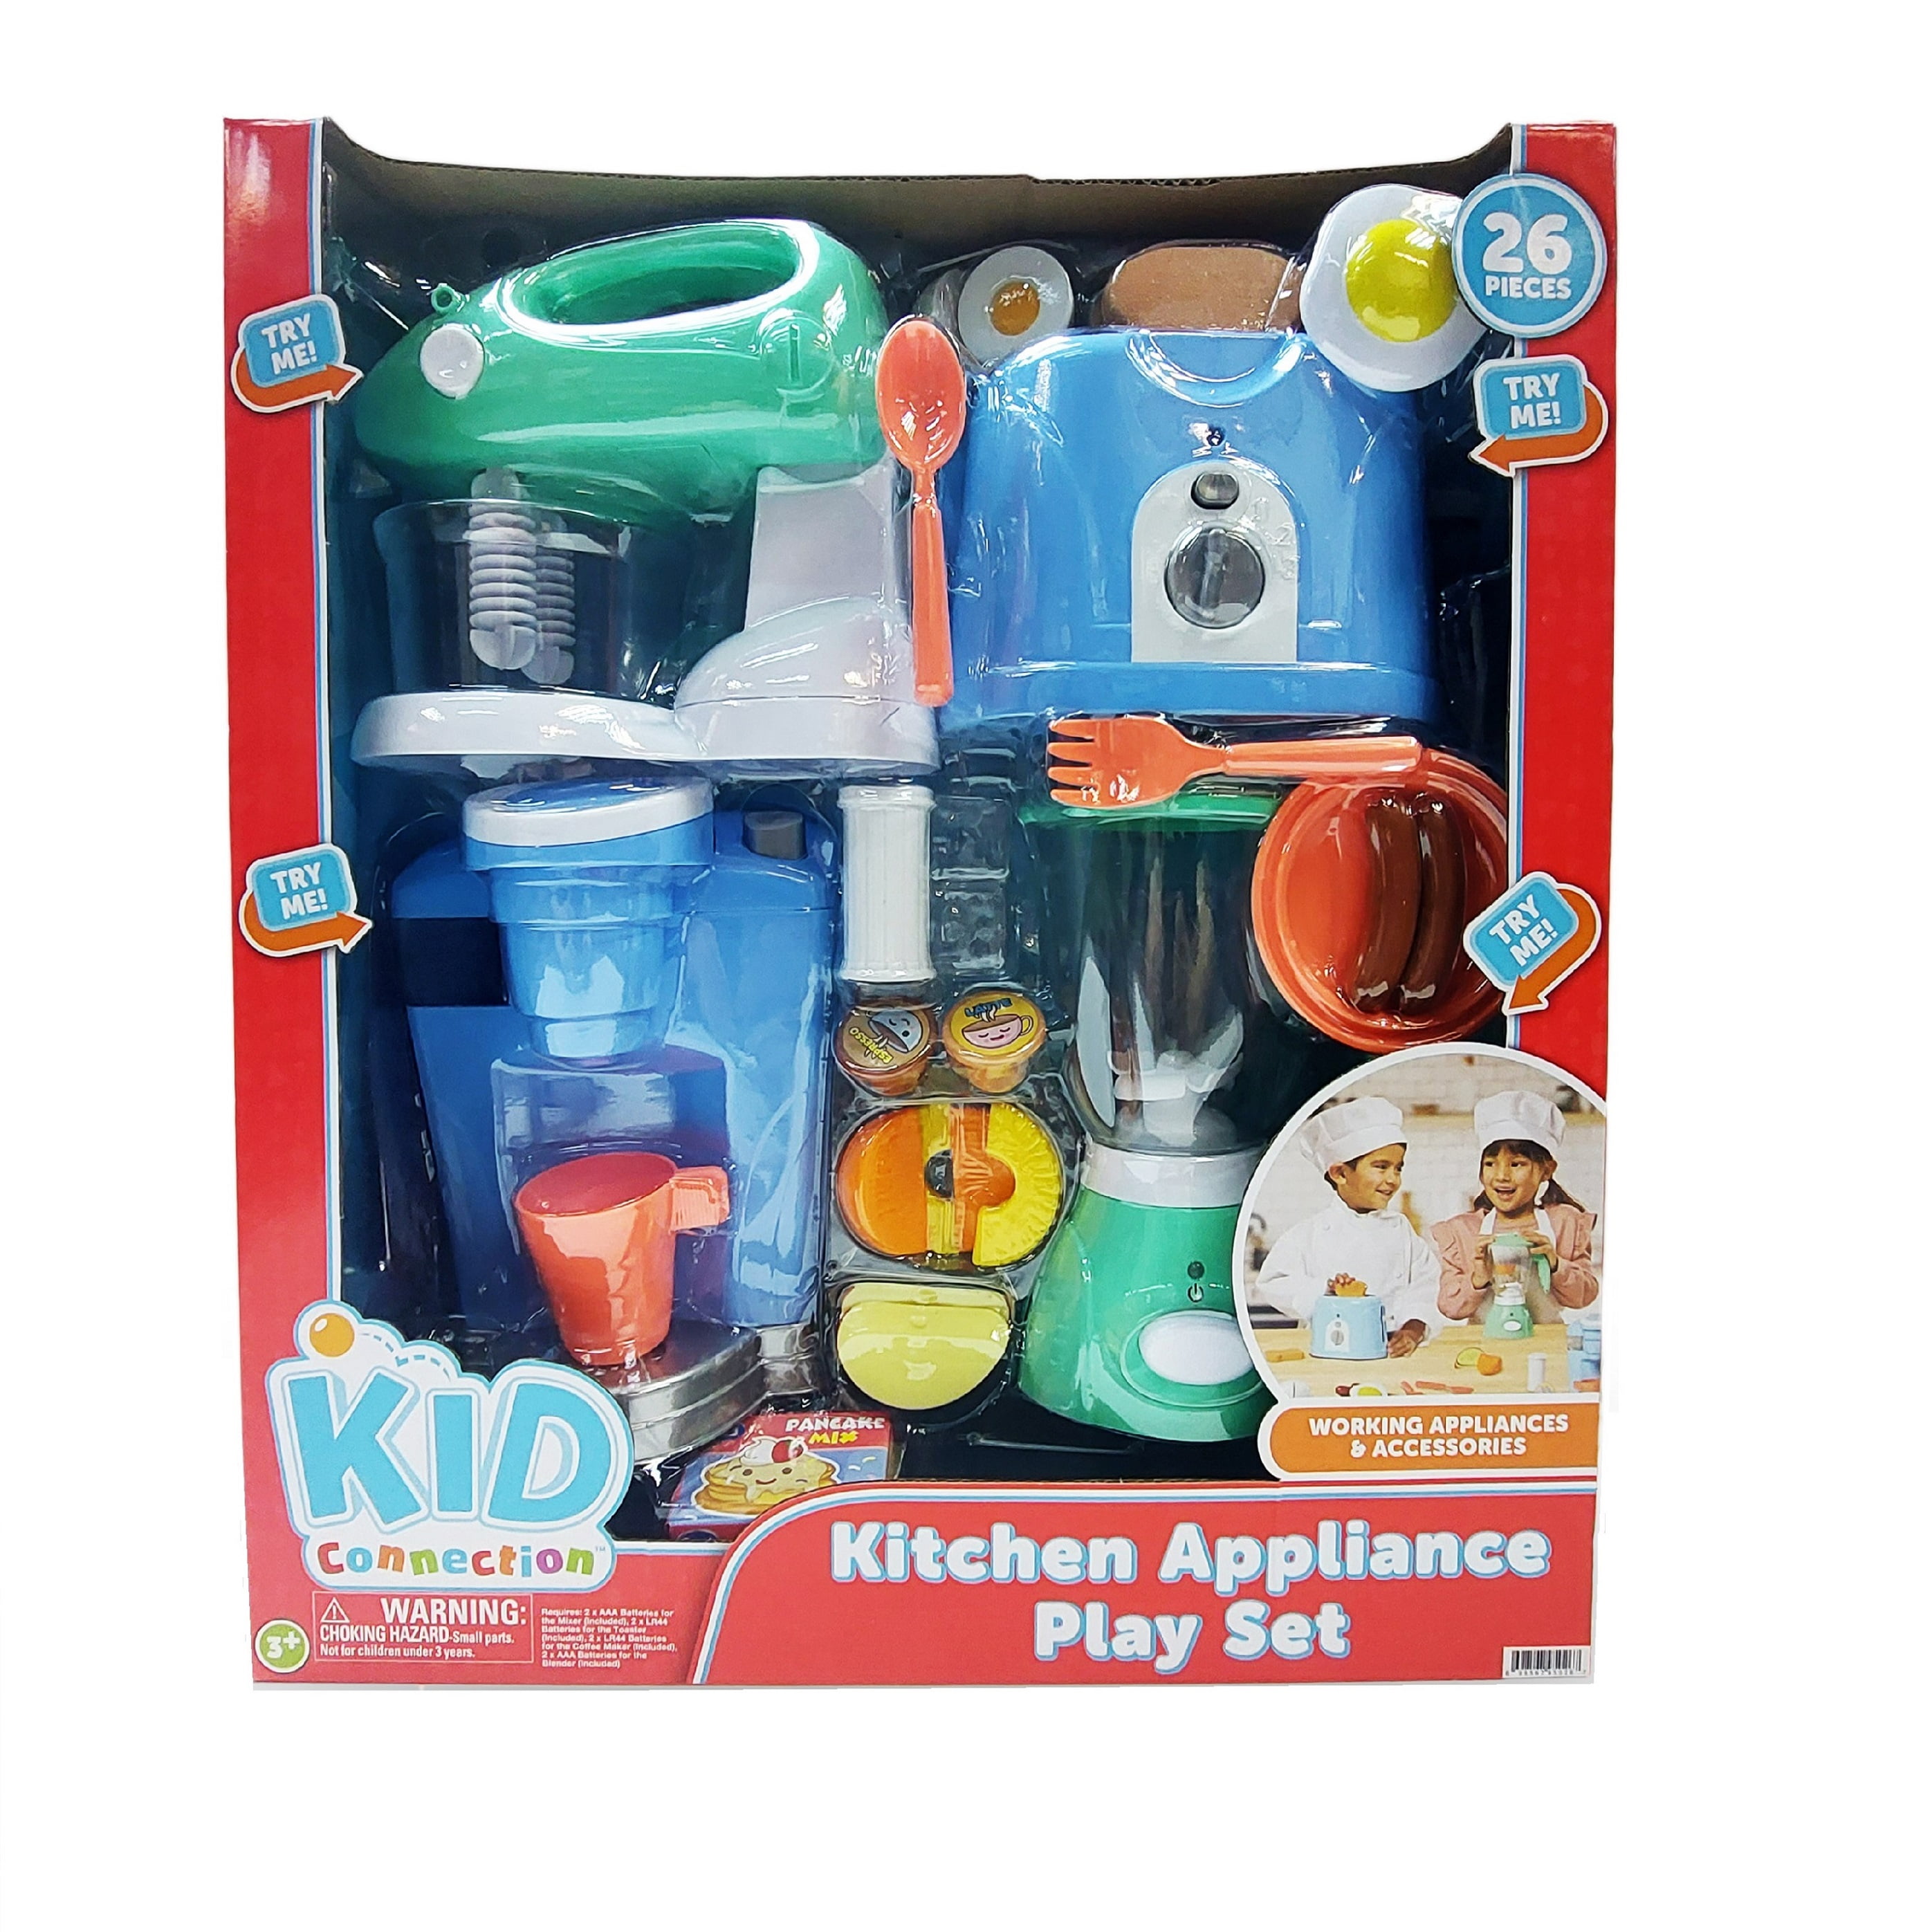 Toy Blender Kitchen Kids Miniature Appliances Accessories Maker